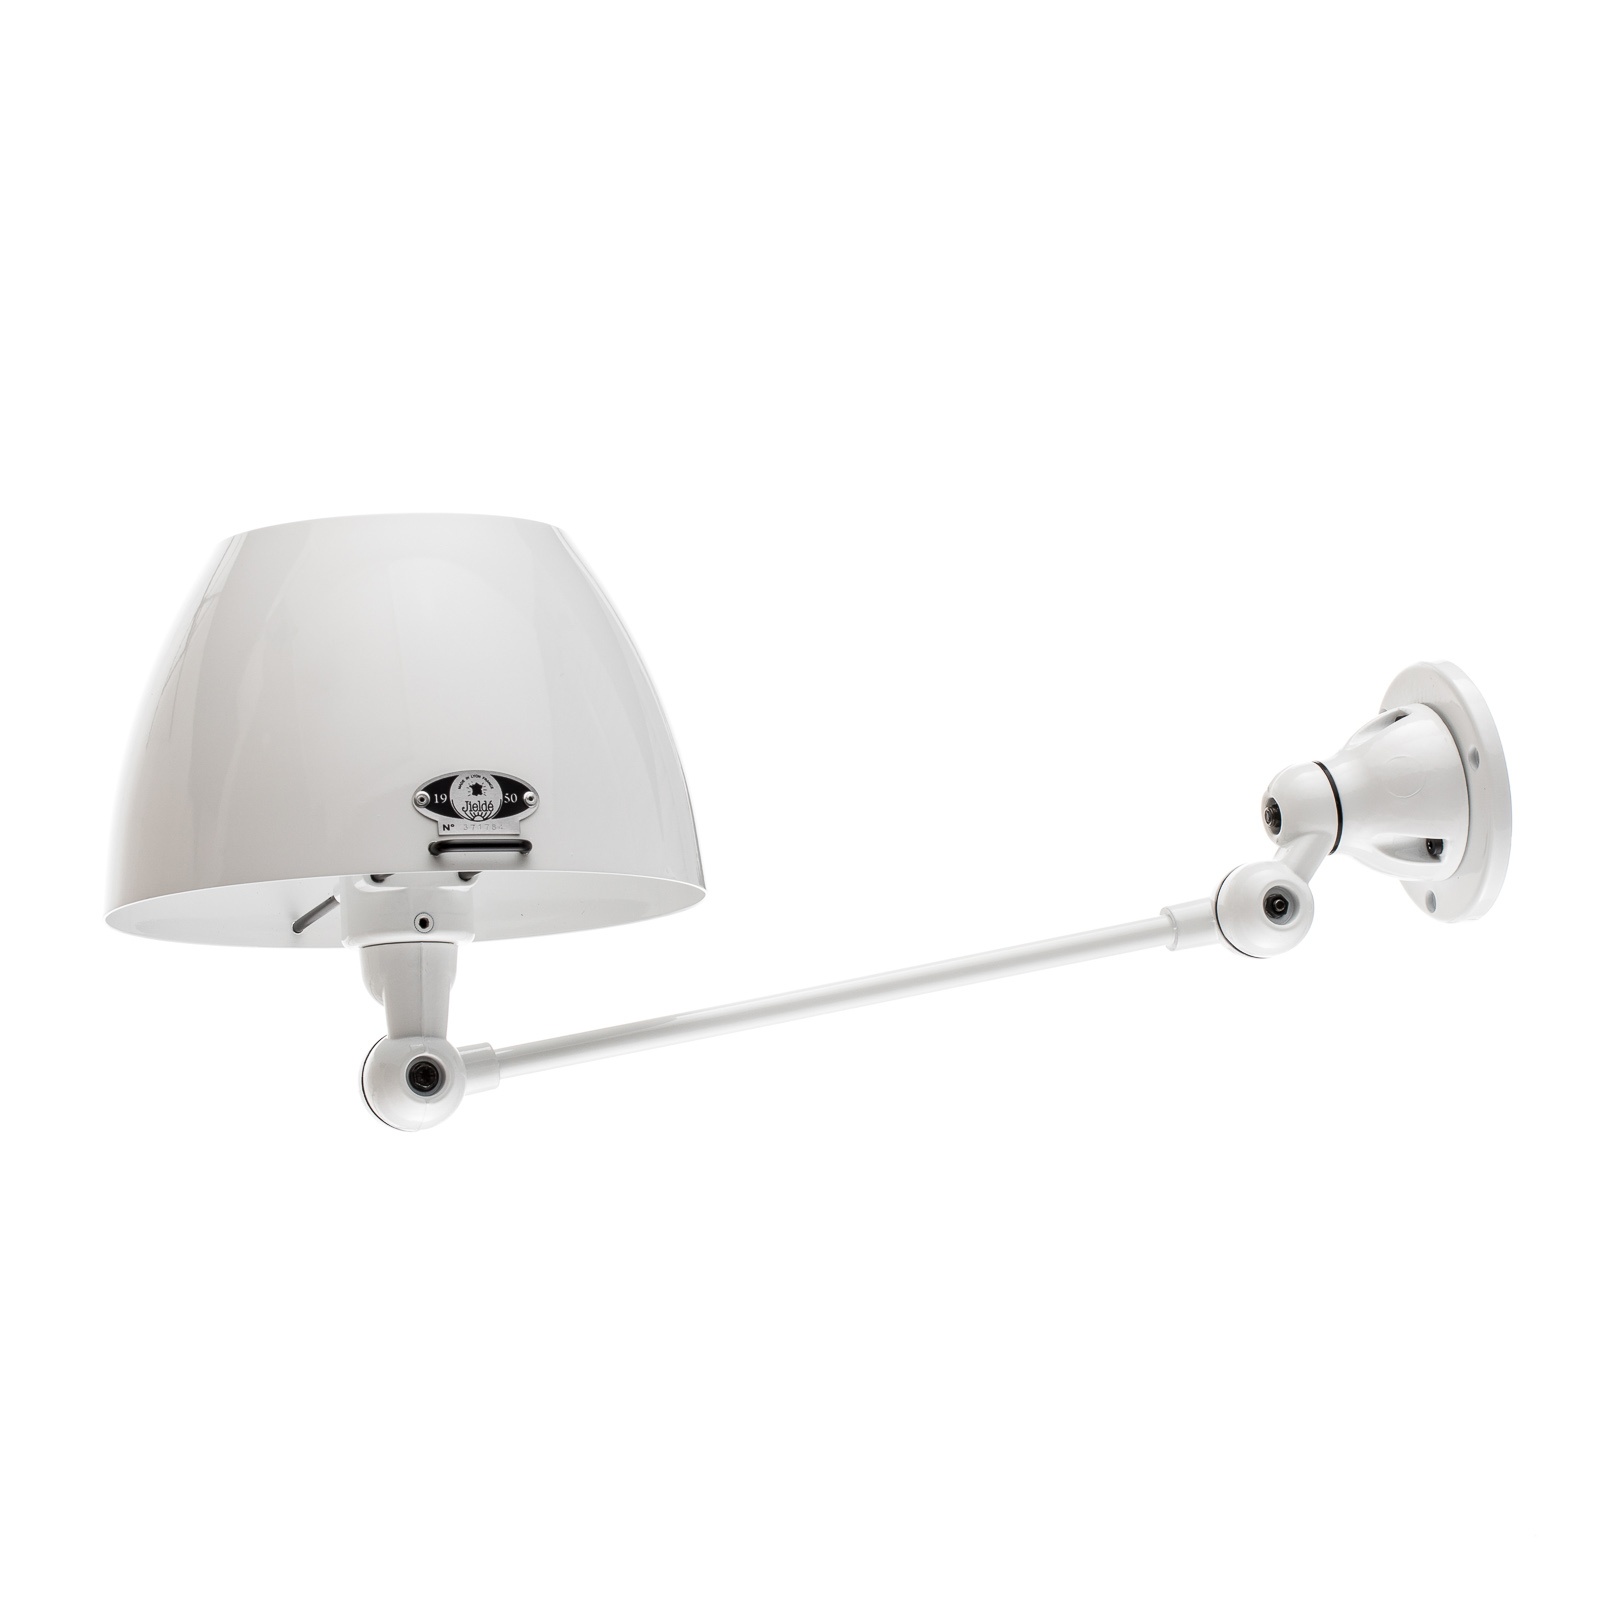 Aicler AIC301 wall lamp articulated arm white